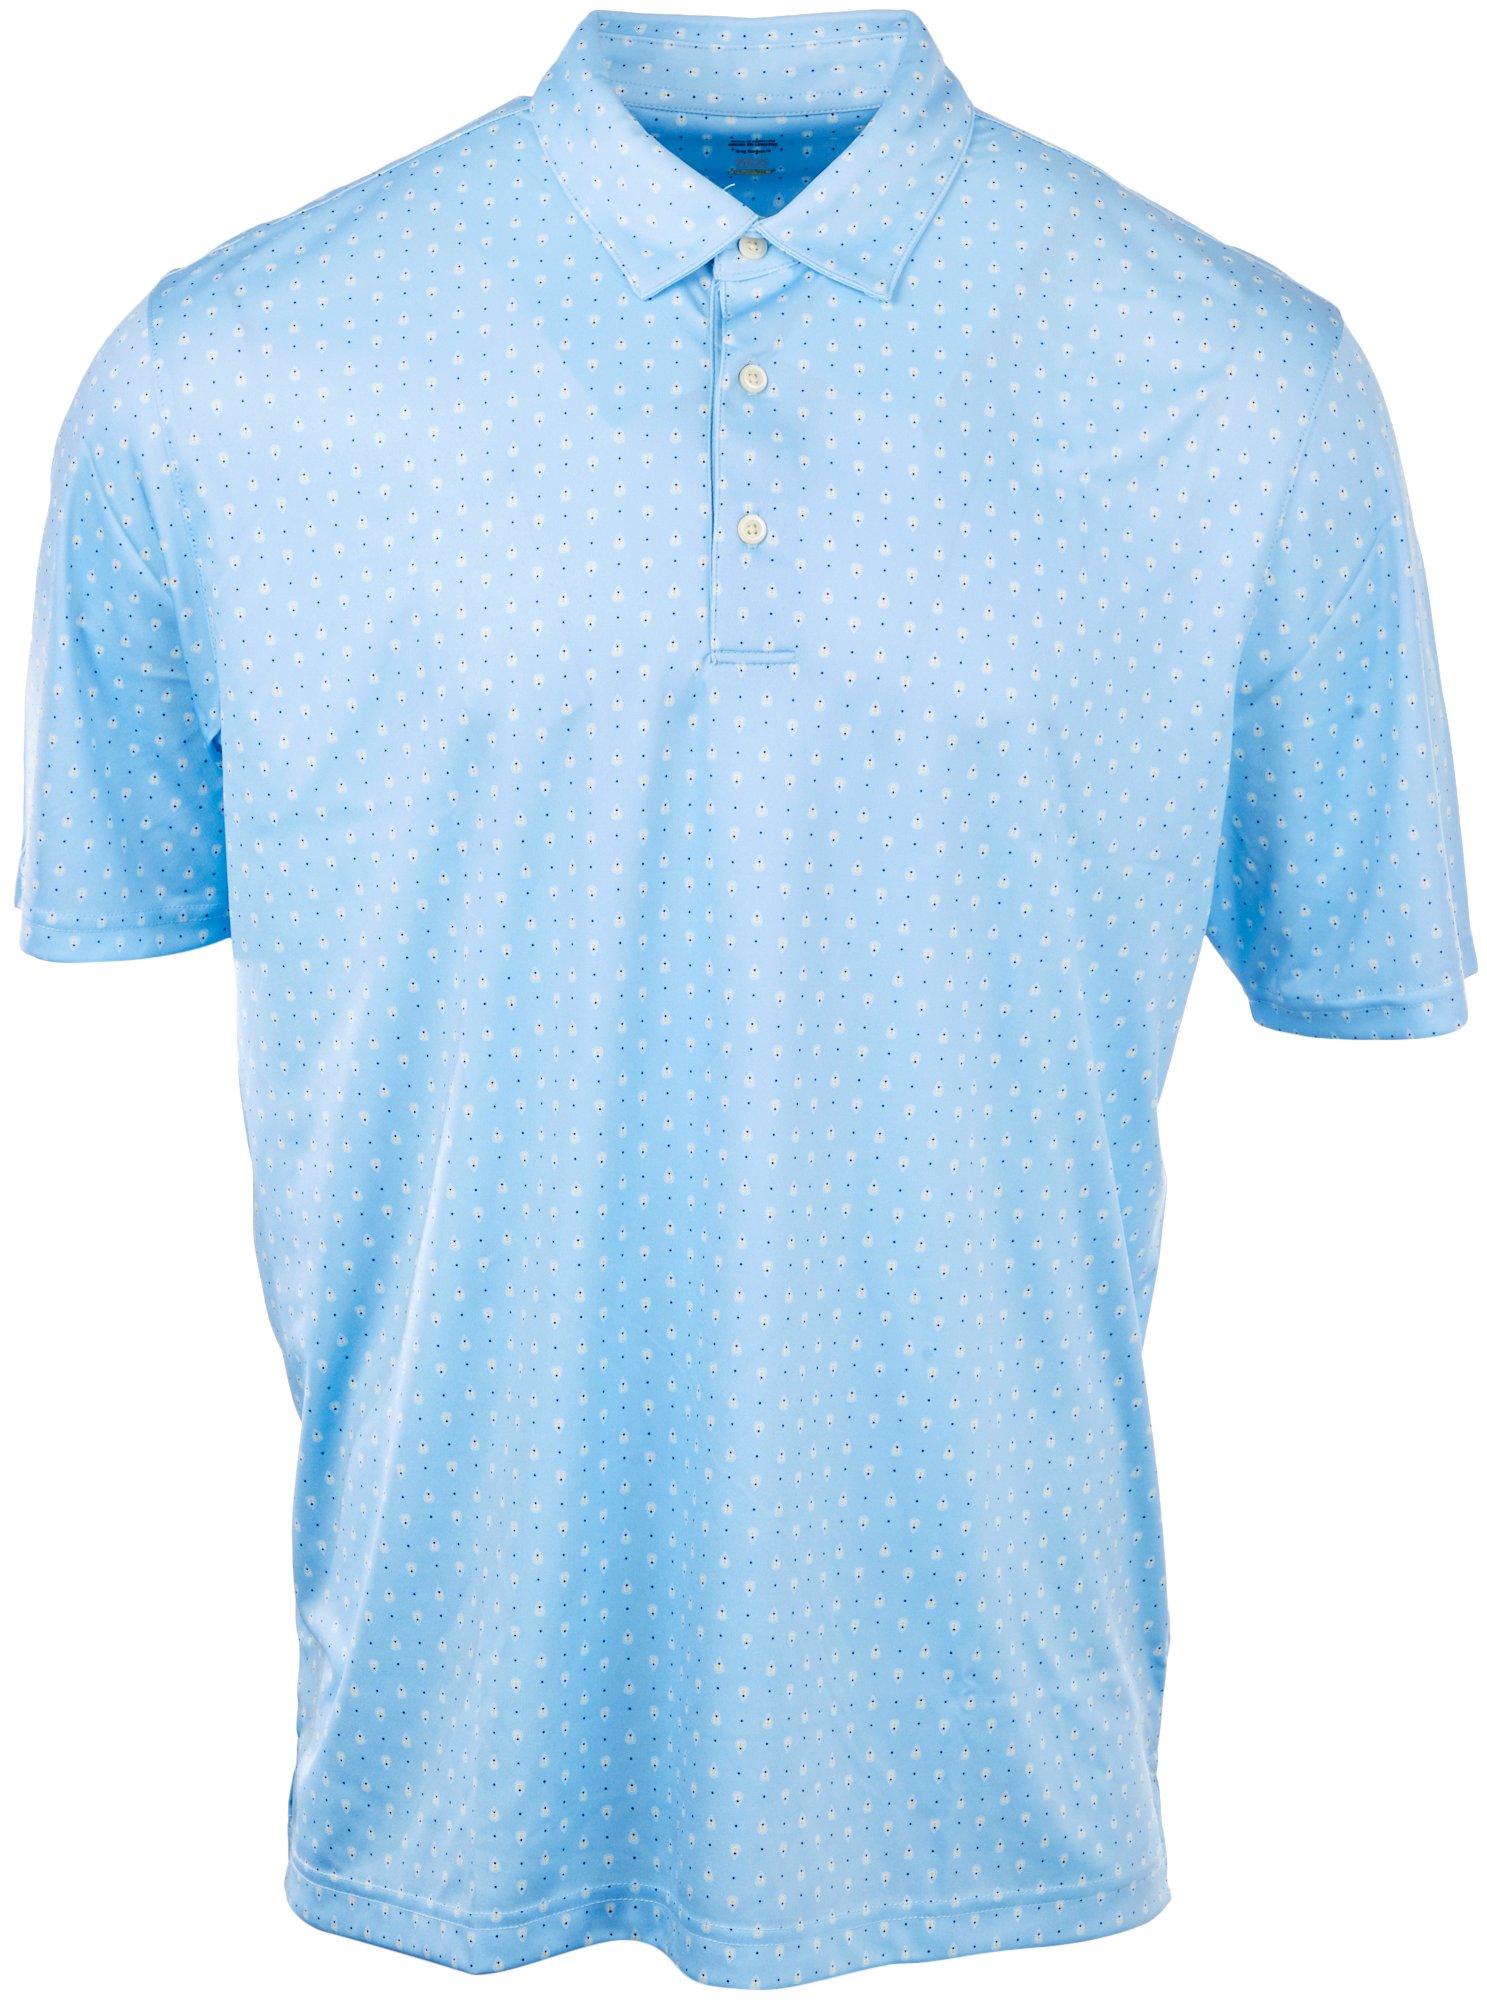 Greg Norman Mens Paisley Foulard Short Sleeve Polo Shirt